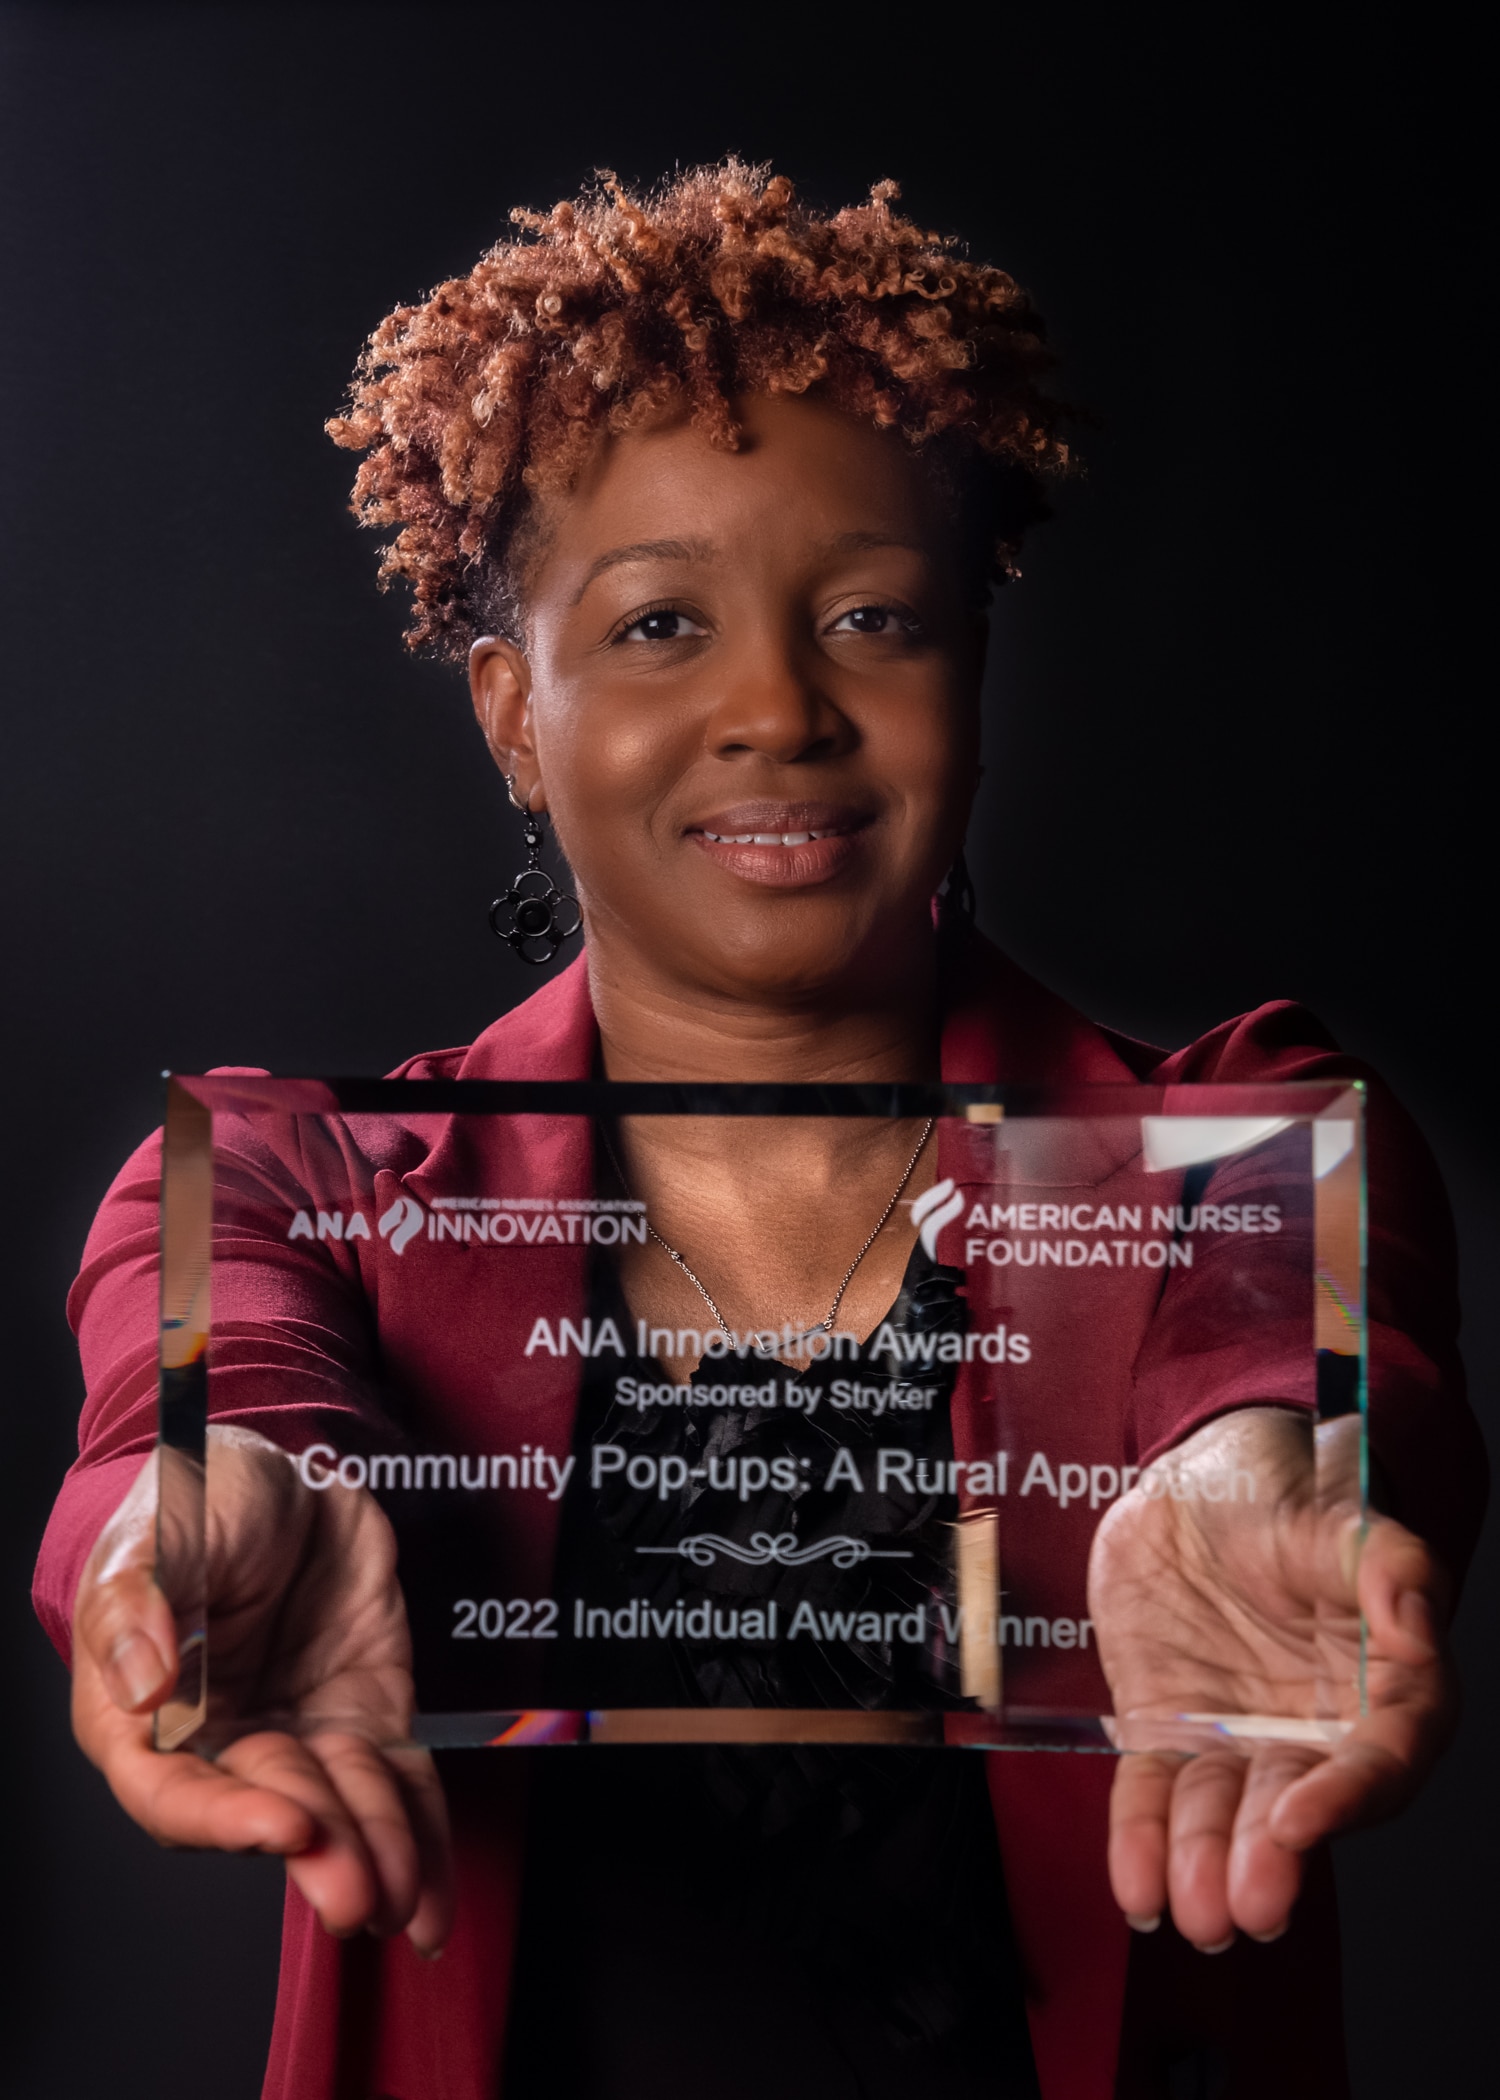 Dr. KaSheta Jackson poses with the 2022 Individual Award for the ANA Innovation Awards.